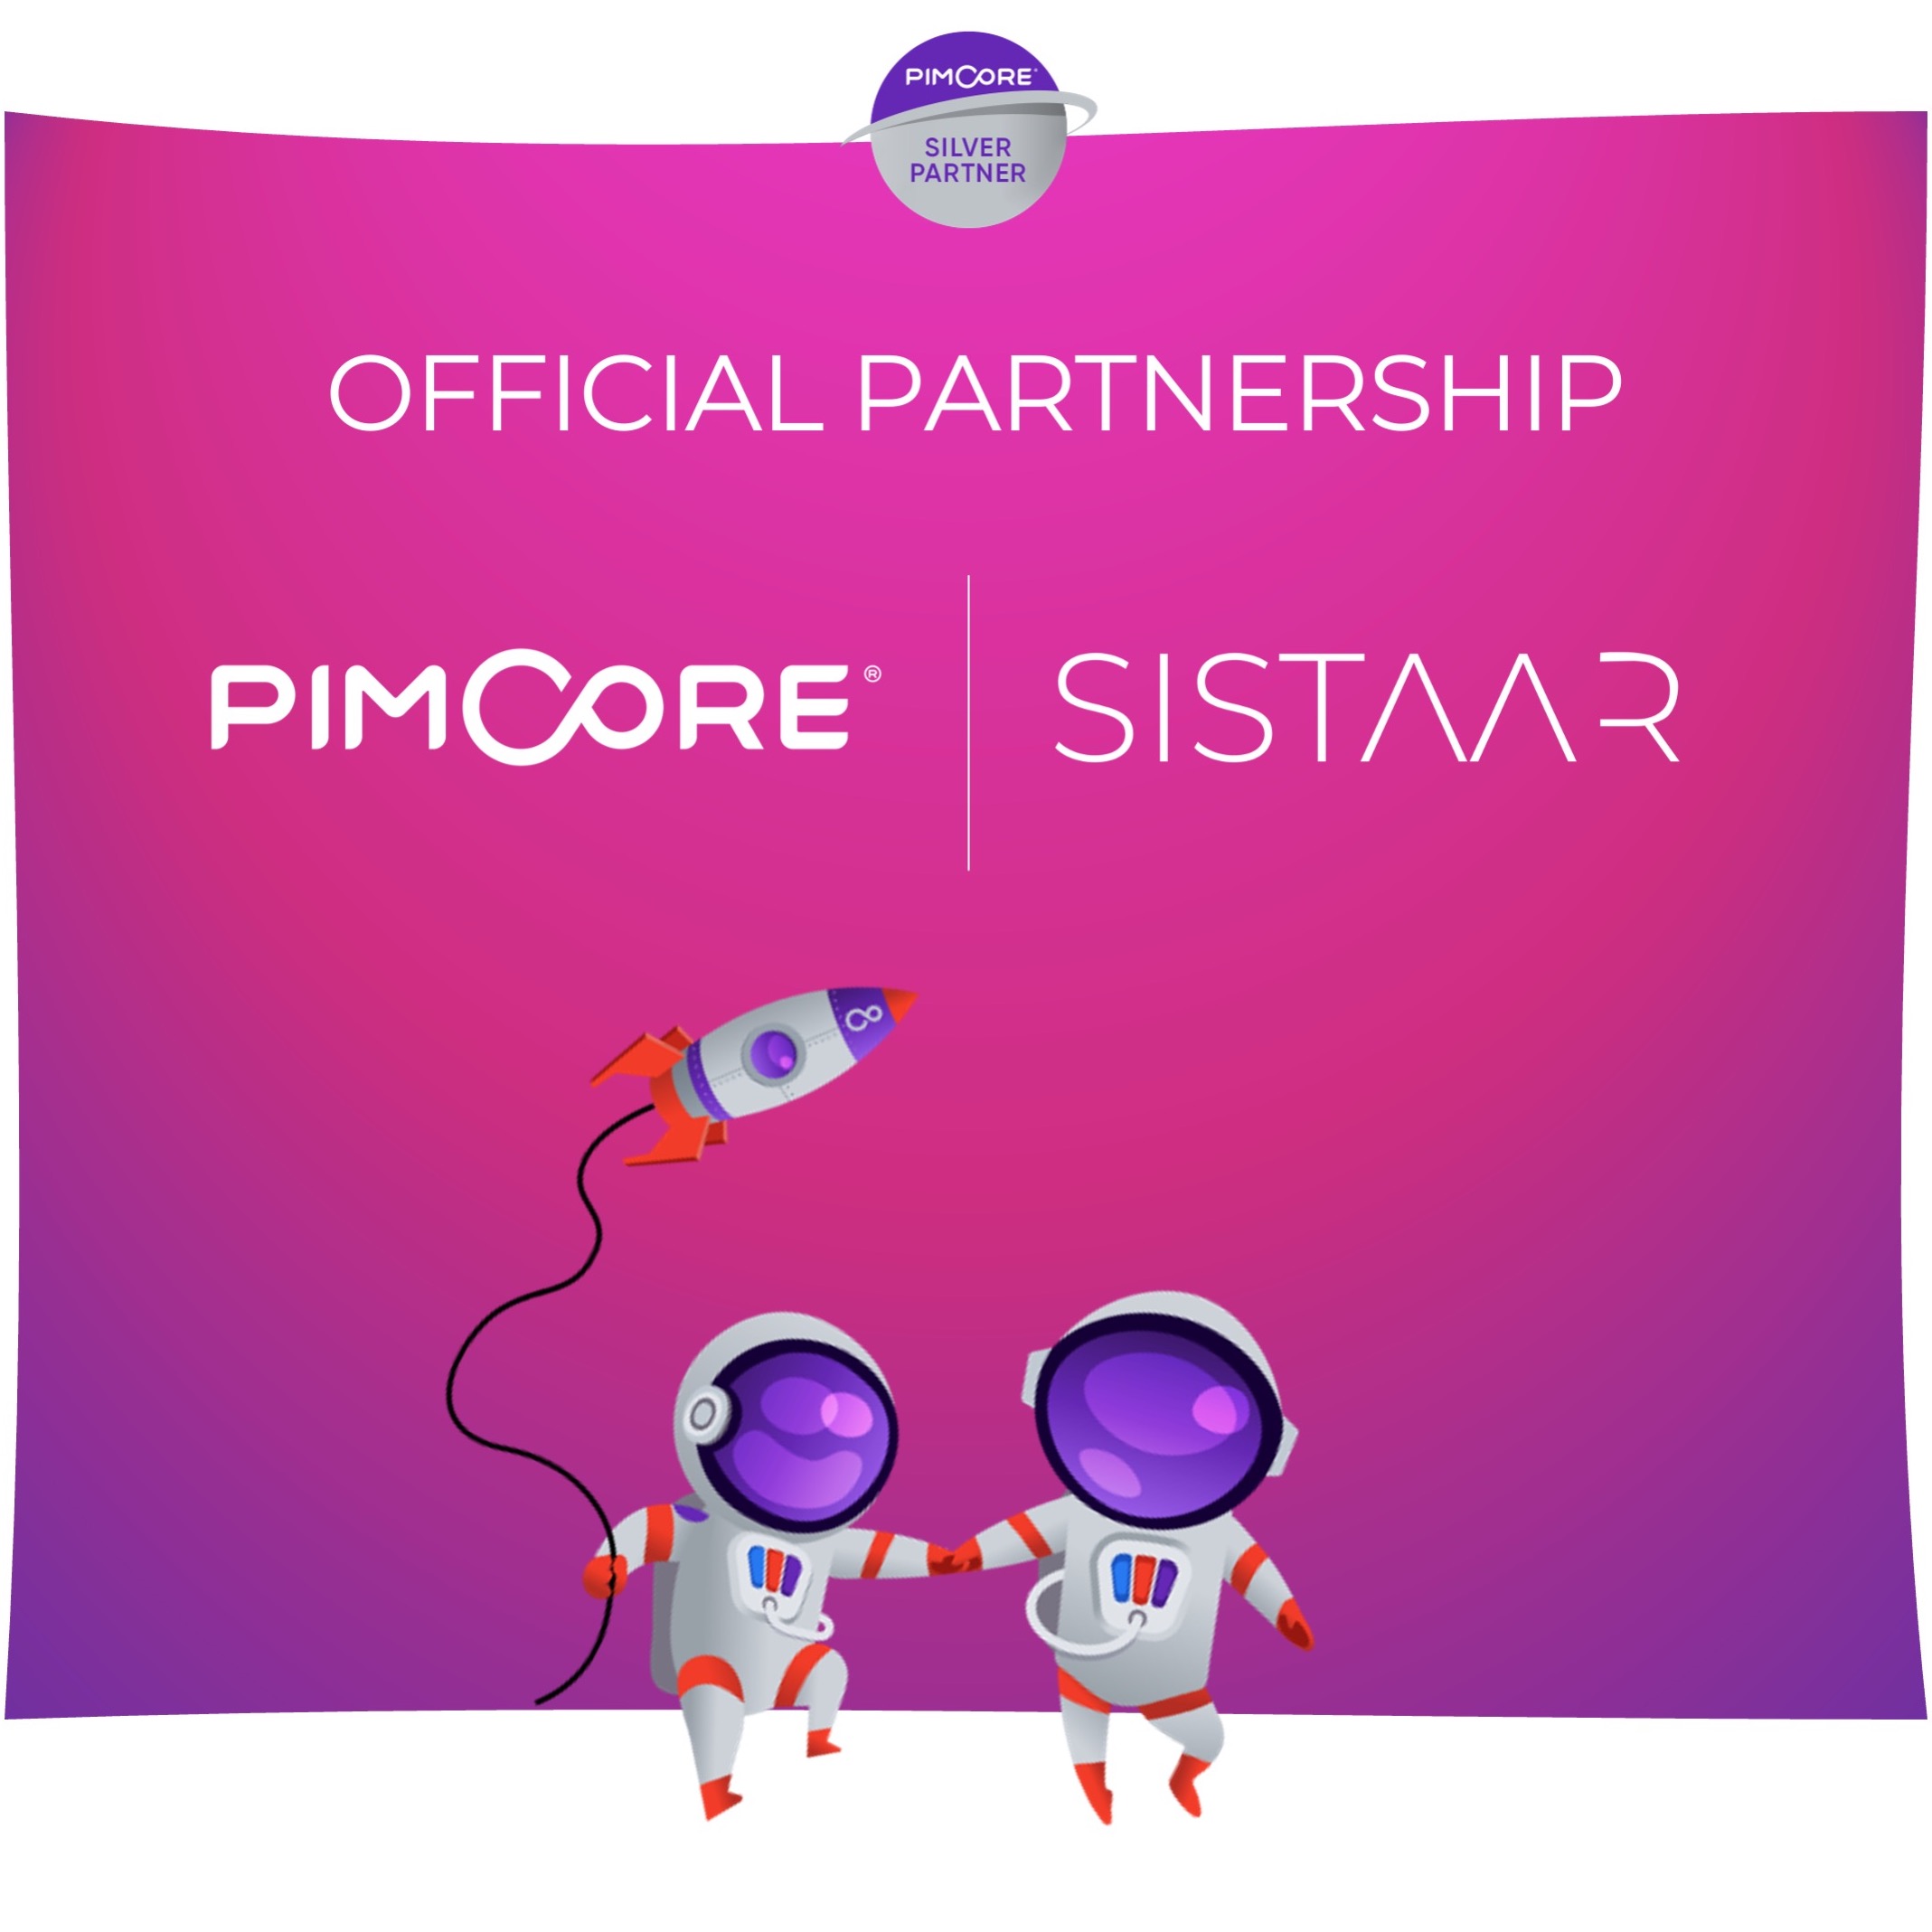 Sistaar Pimcore Partnership